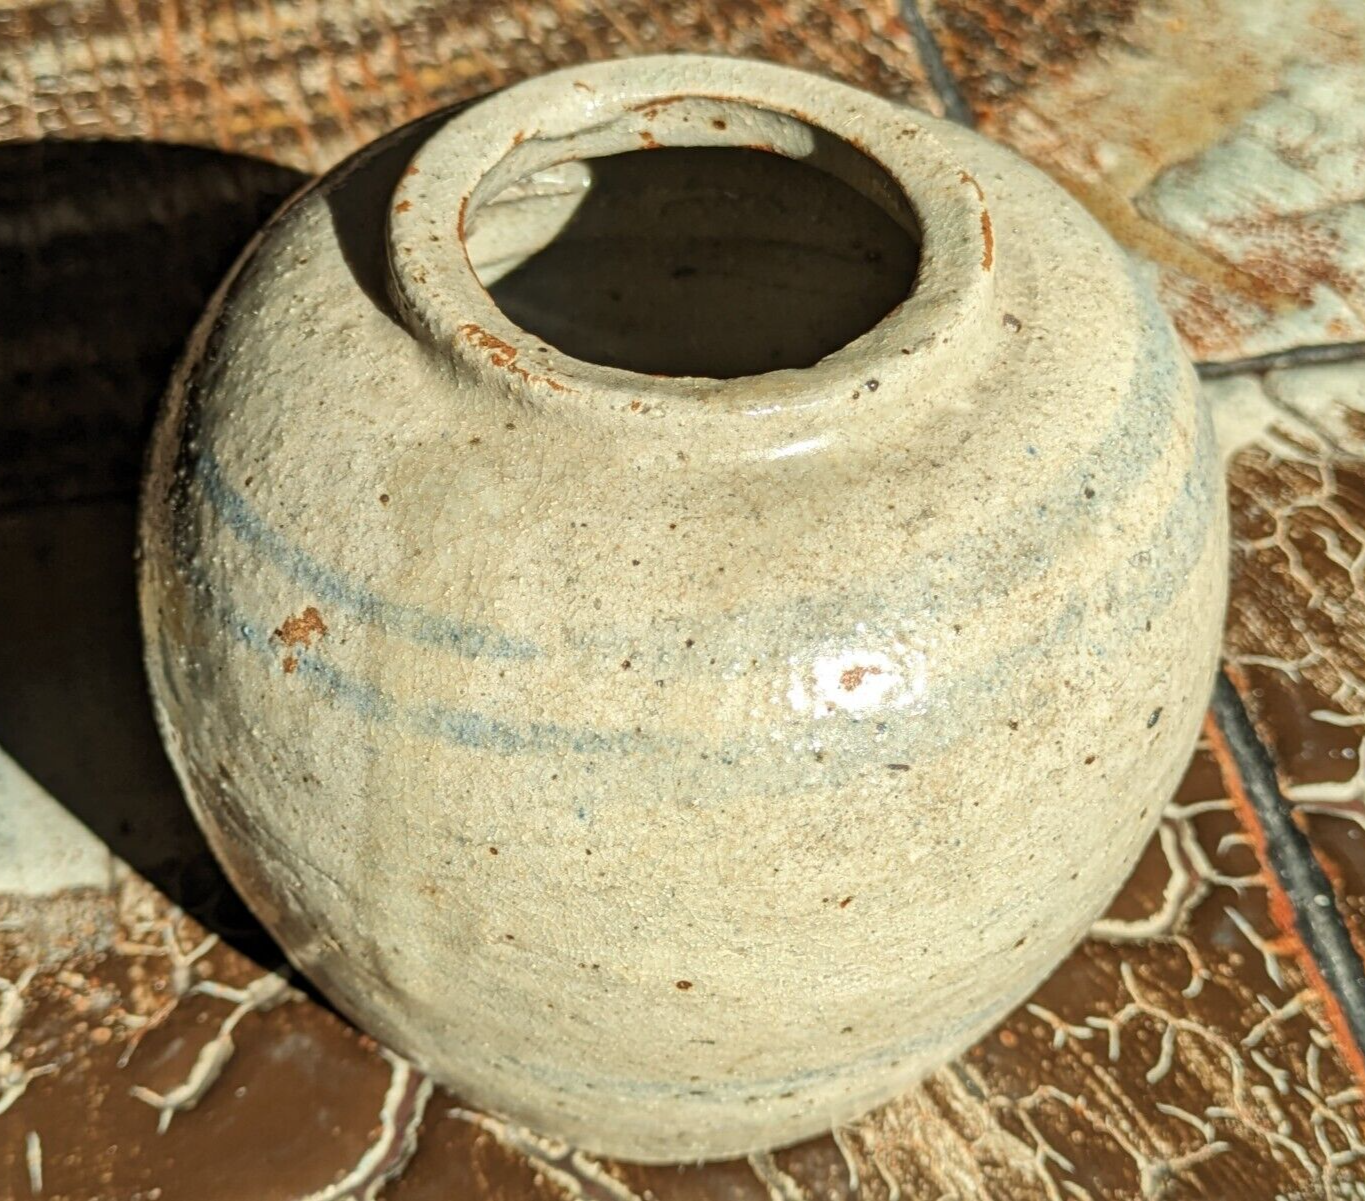 17th Century Chinese Ming Dynasty Ceramic Provincial Ginger Jar Vase Pot Antique